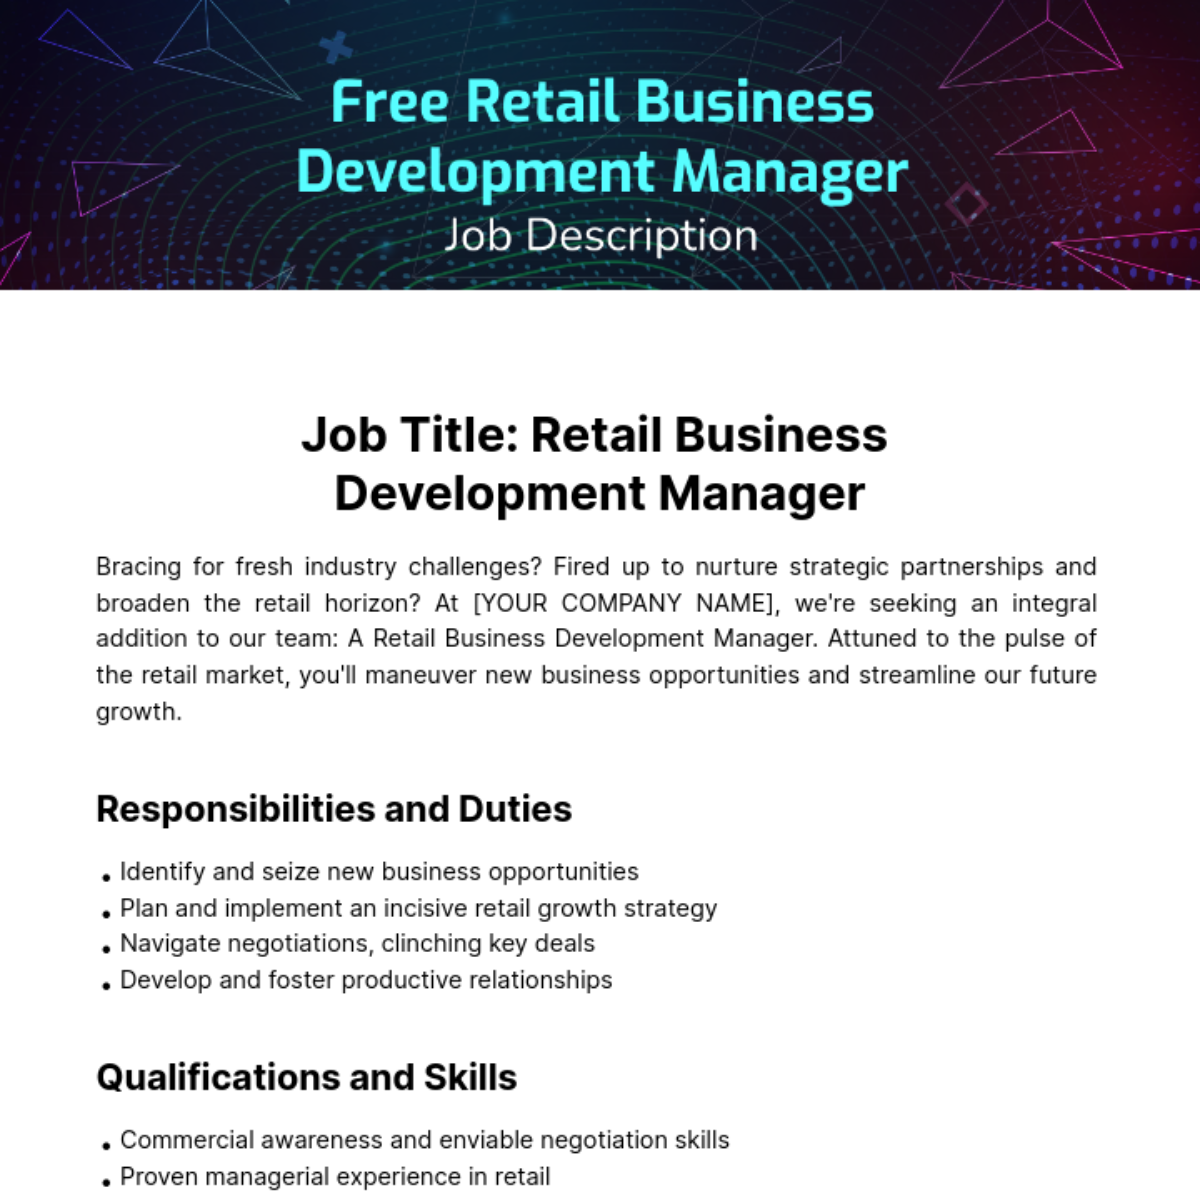 Free Retail Business Development Manager Job Description Template